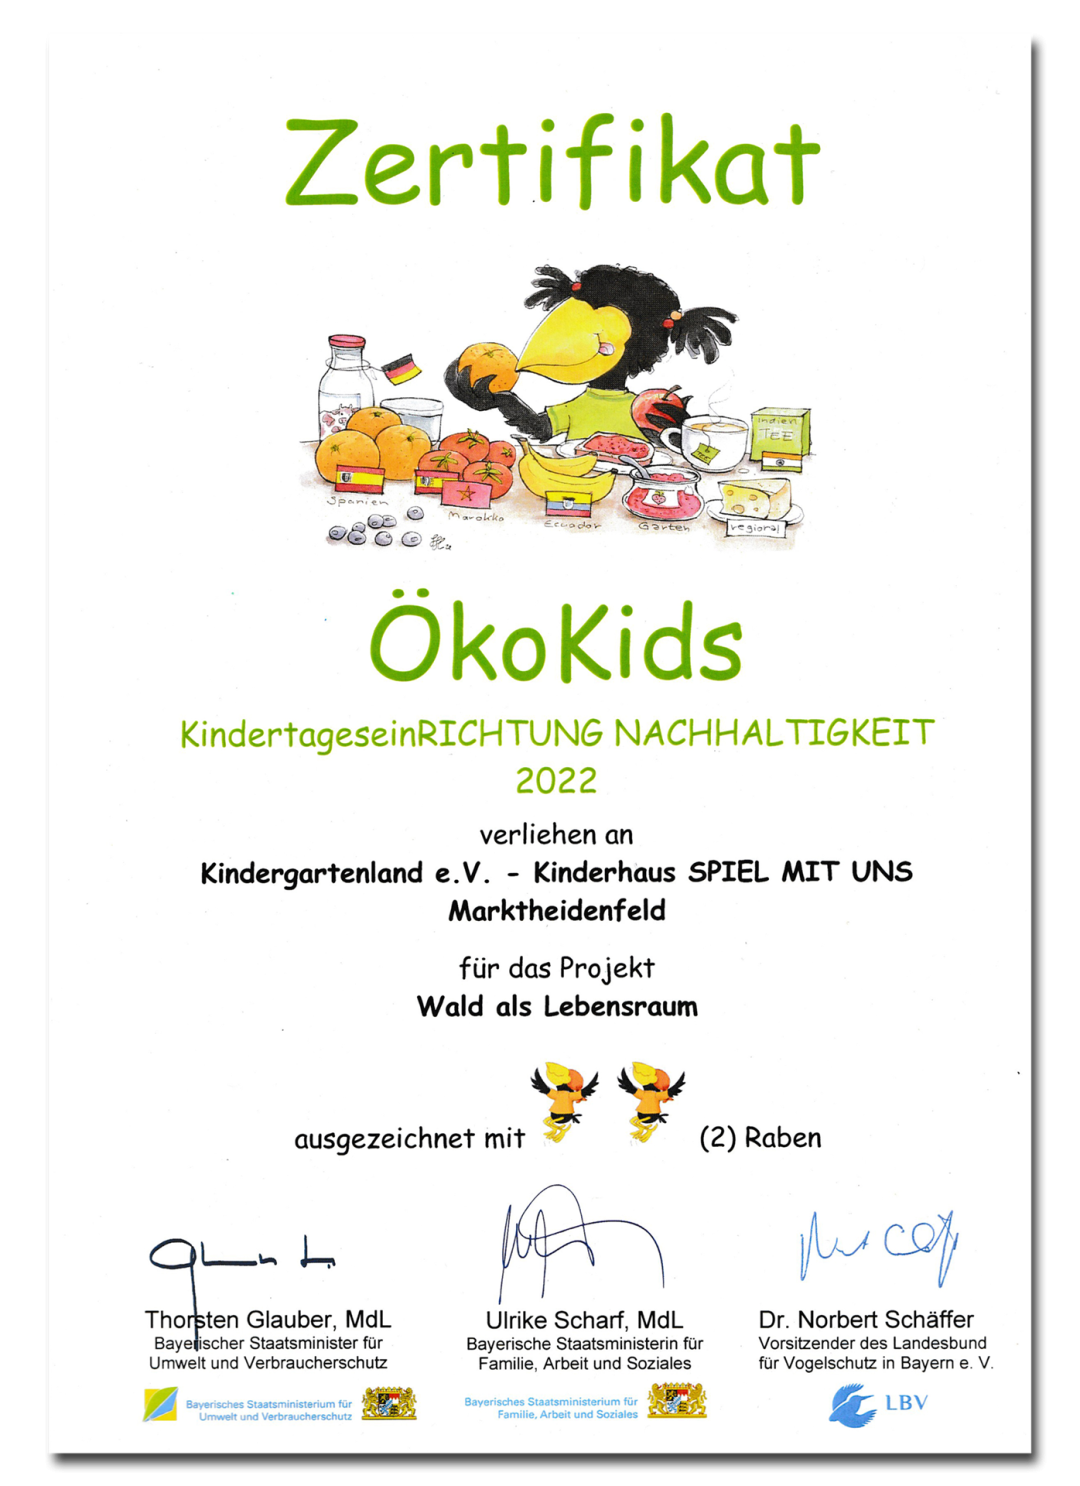 Zertifkat ÖkoKids2022 für Kindergartenland e.V.